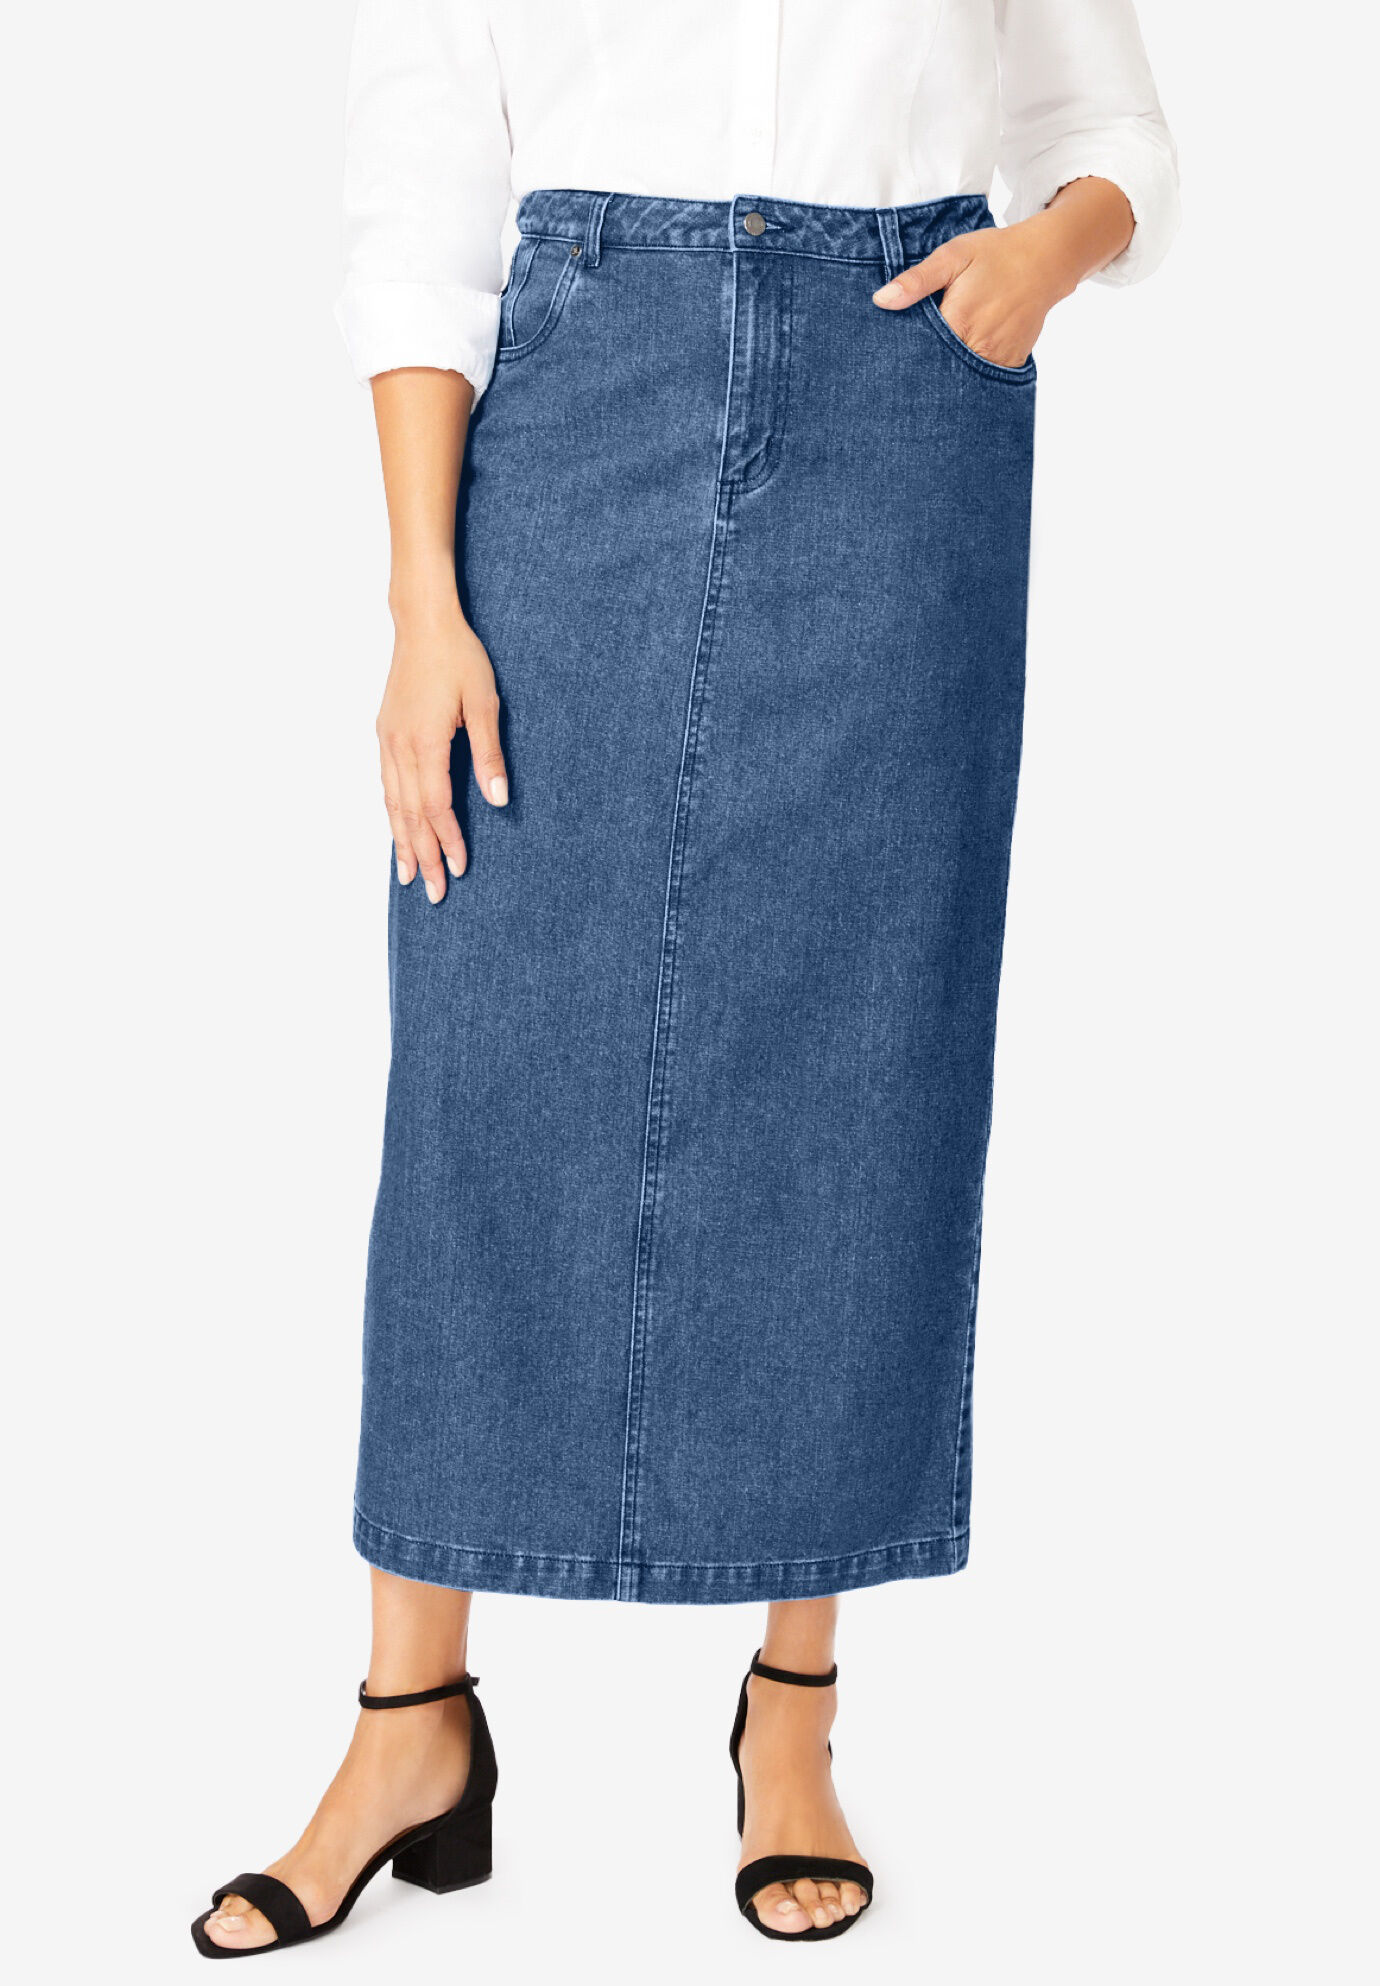 jessica london jean skirts